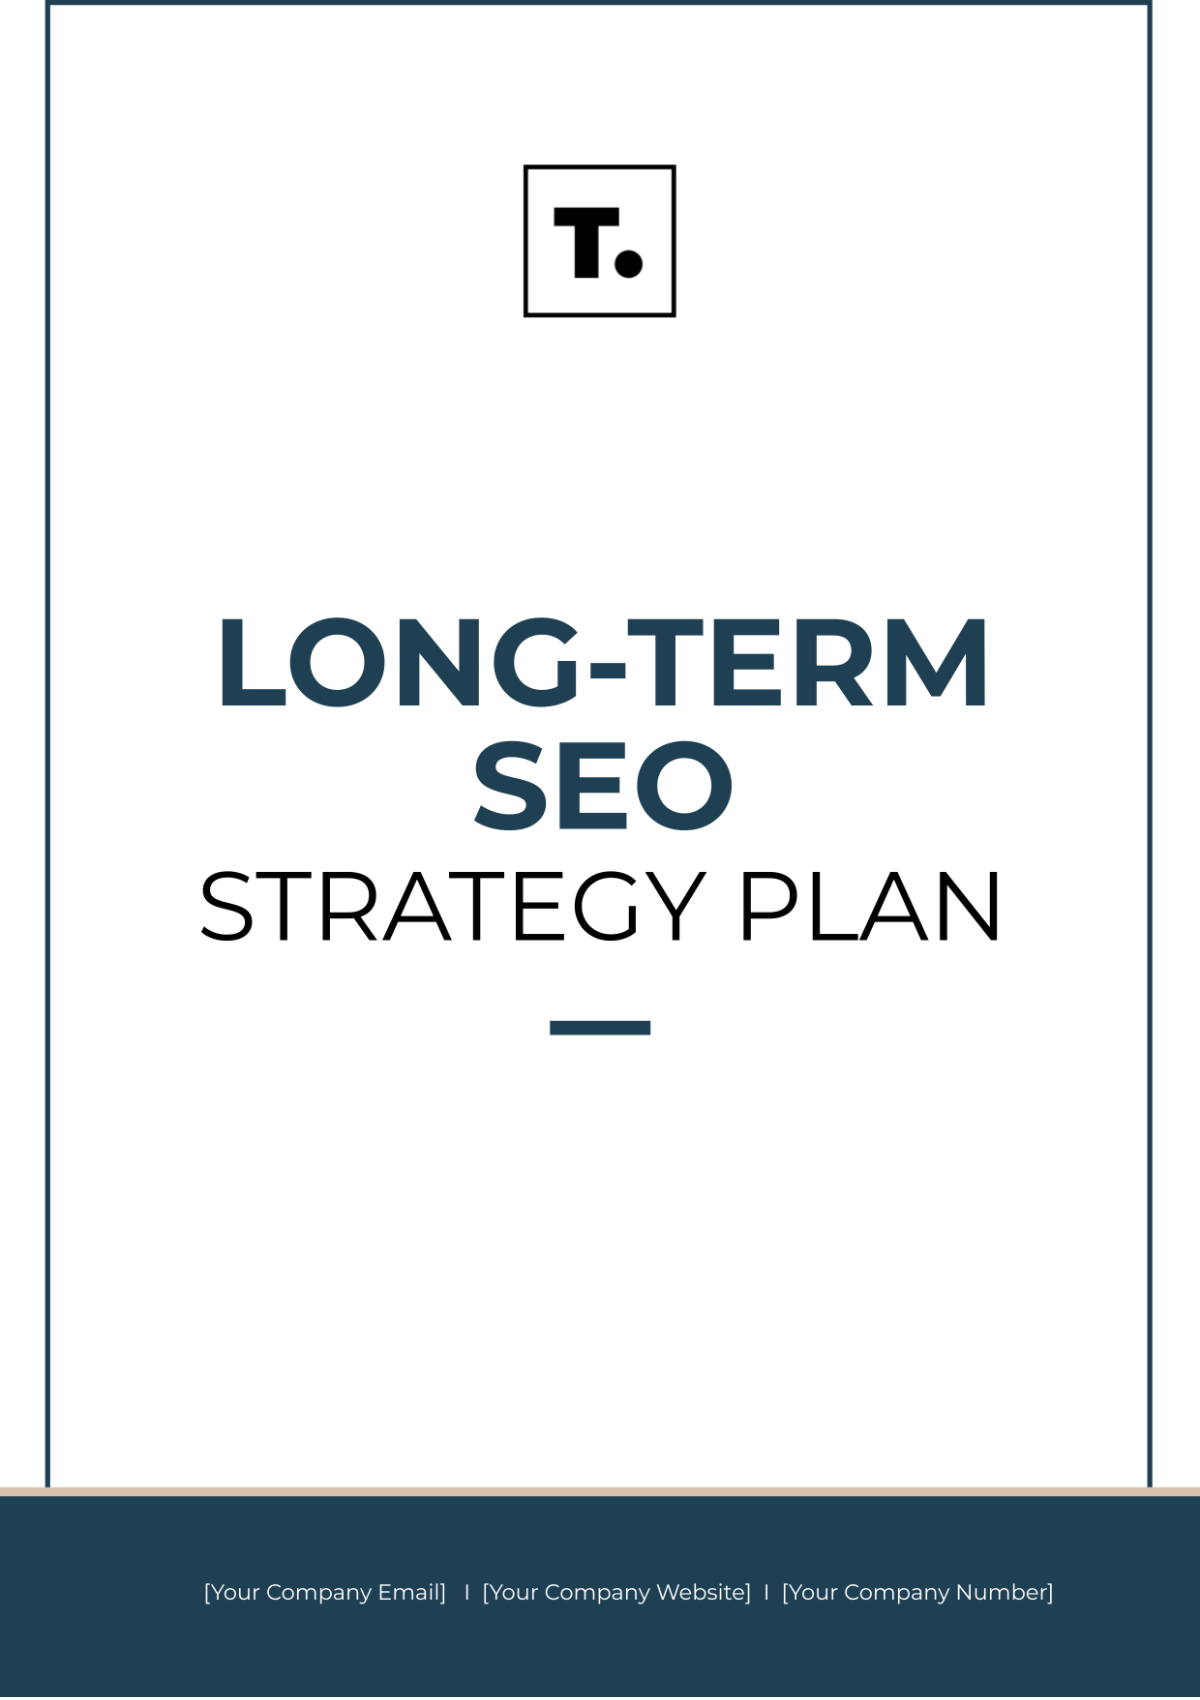 Free Long-Term SEO Strategy Plan Template